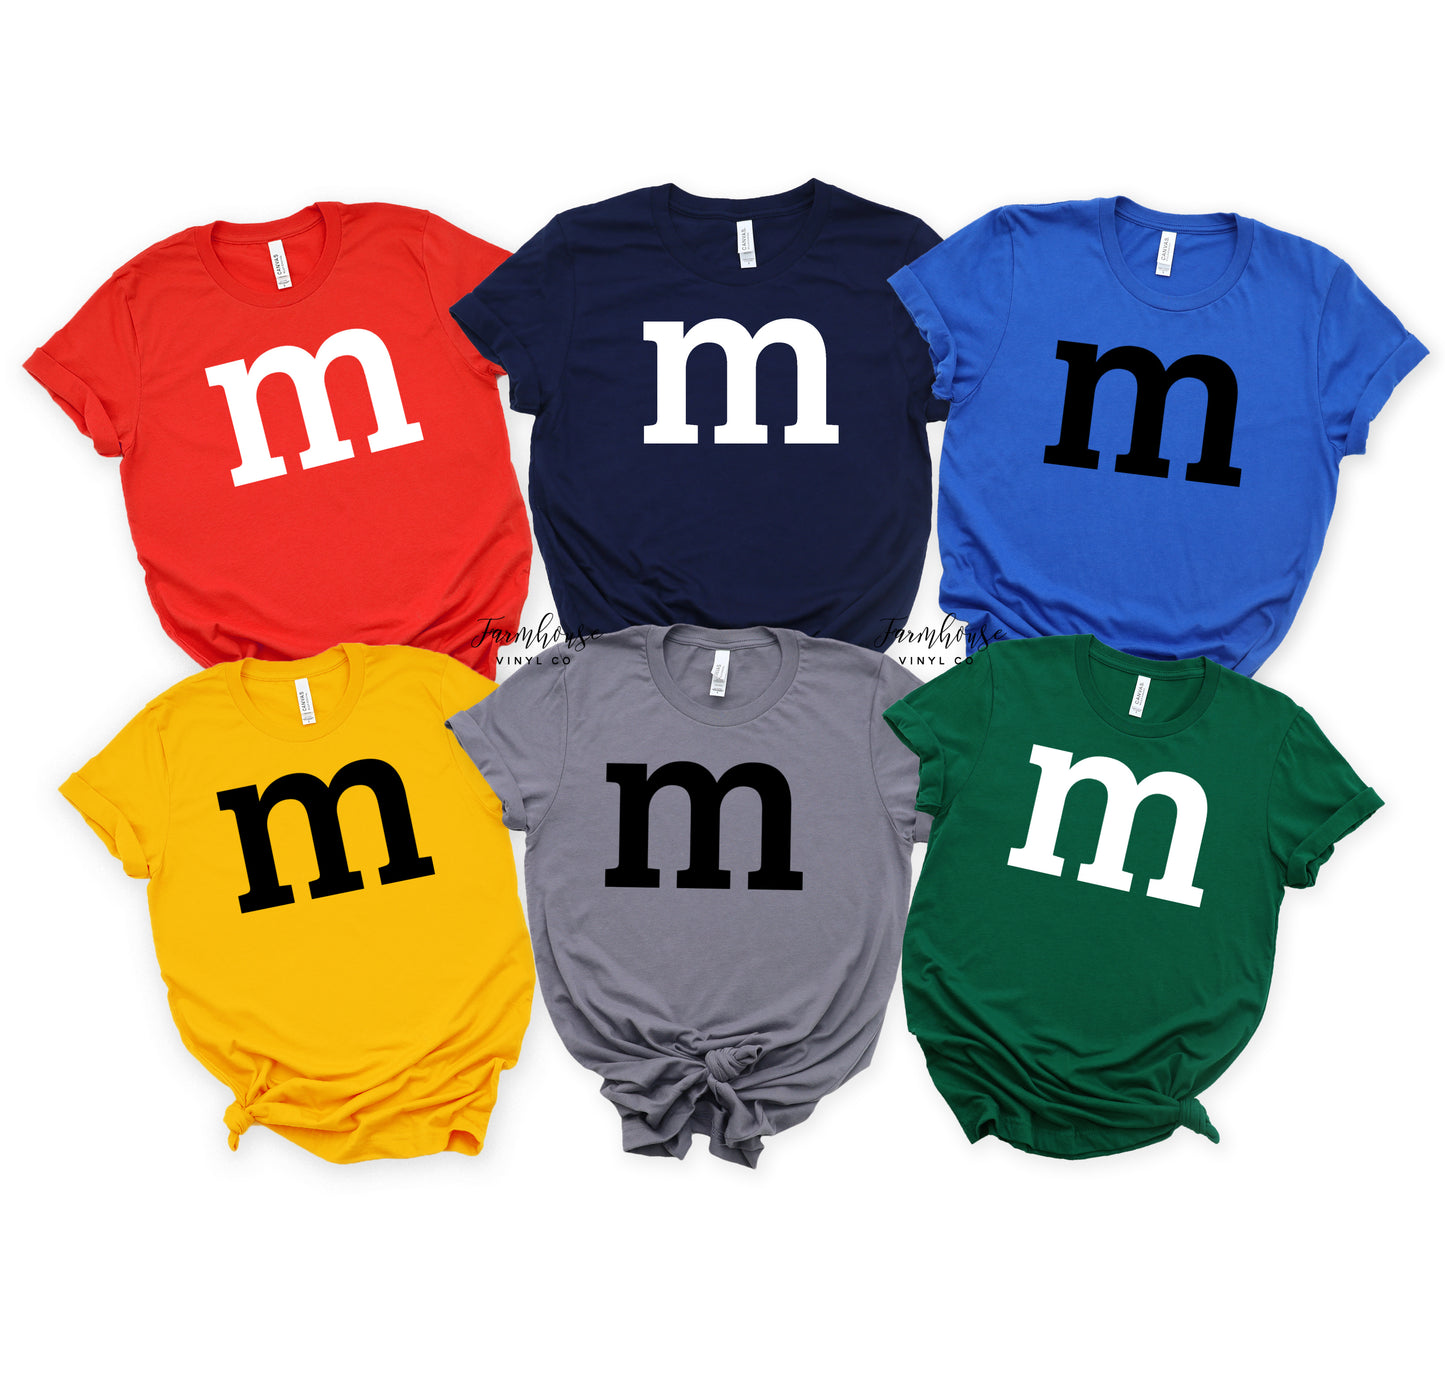 M & M Chocolate Candy Halloween Group Matching Shirts